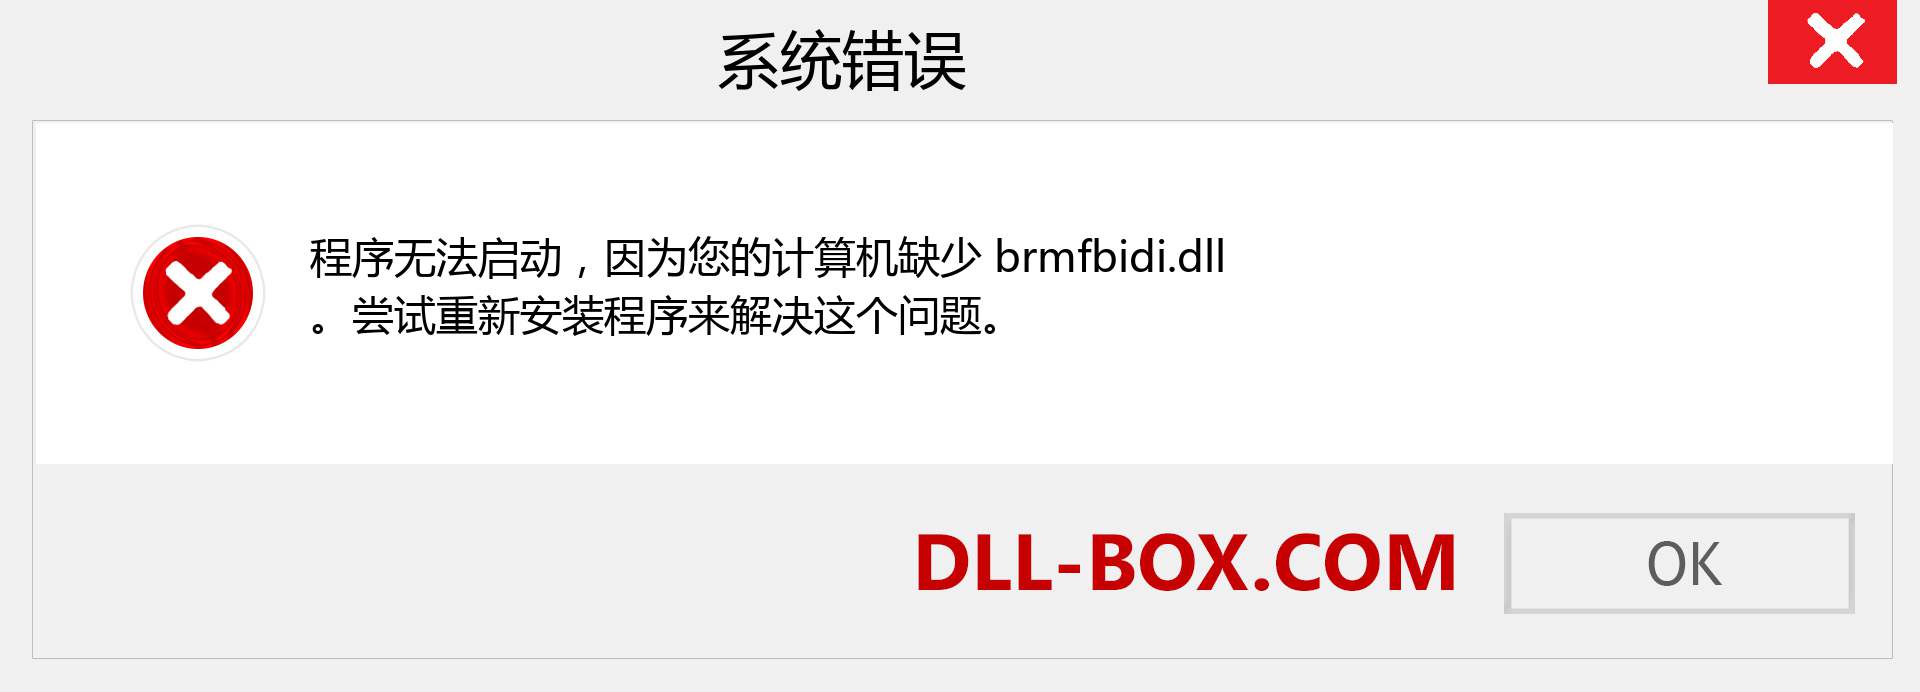 brmfbidi.dll 文件丢失？。 适用于 Windows 7、8、10 的下载 - 修复 Windows、照片、图像上的 brmfbidi dll 丢失错误